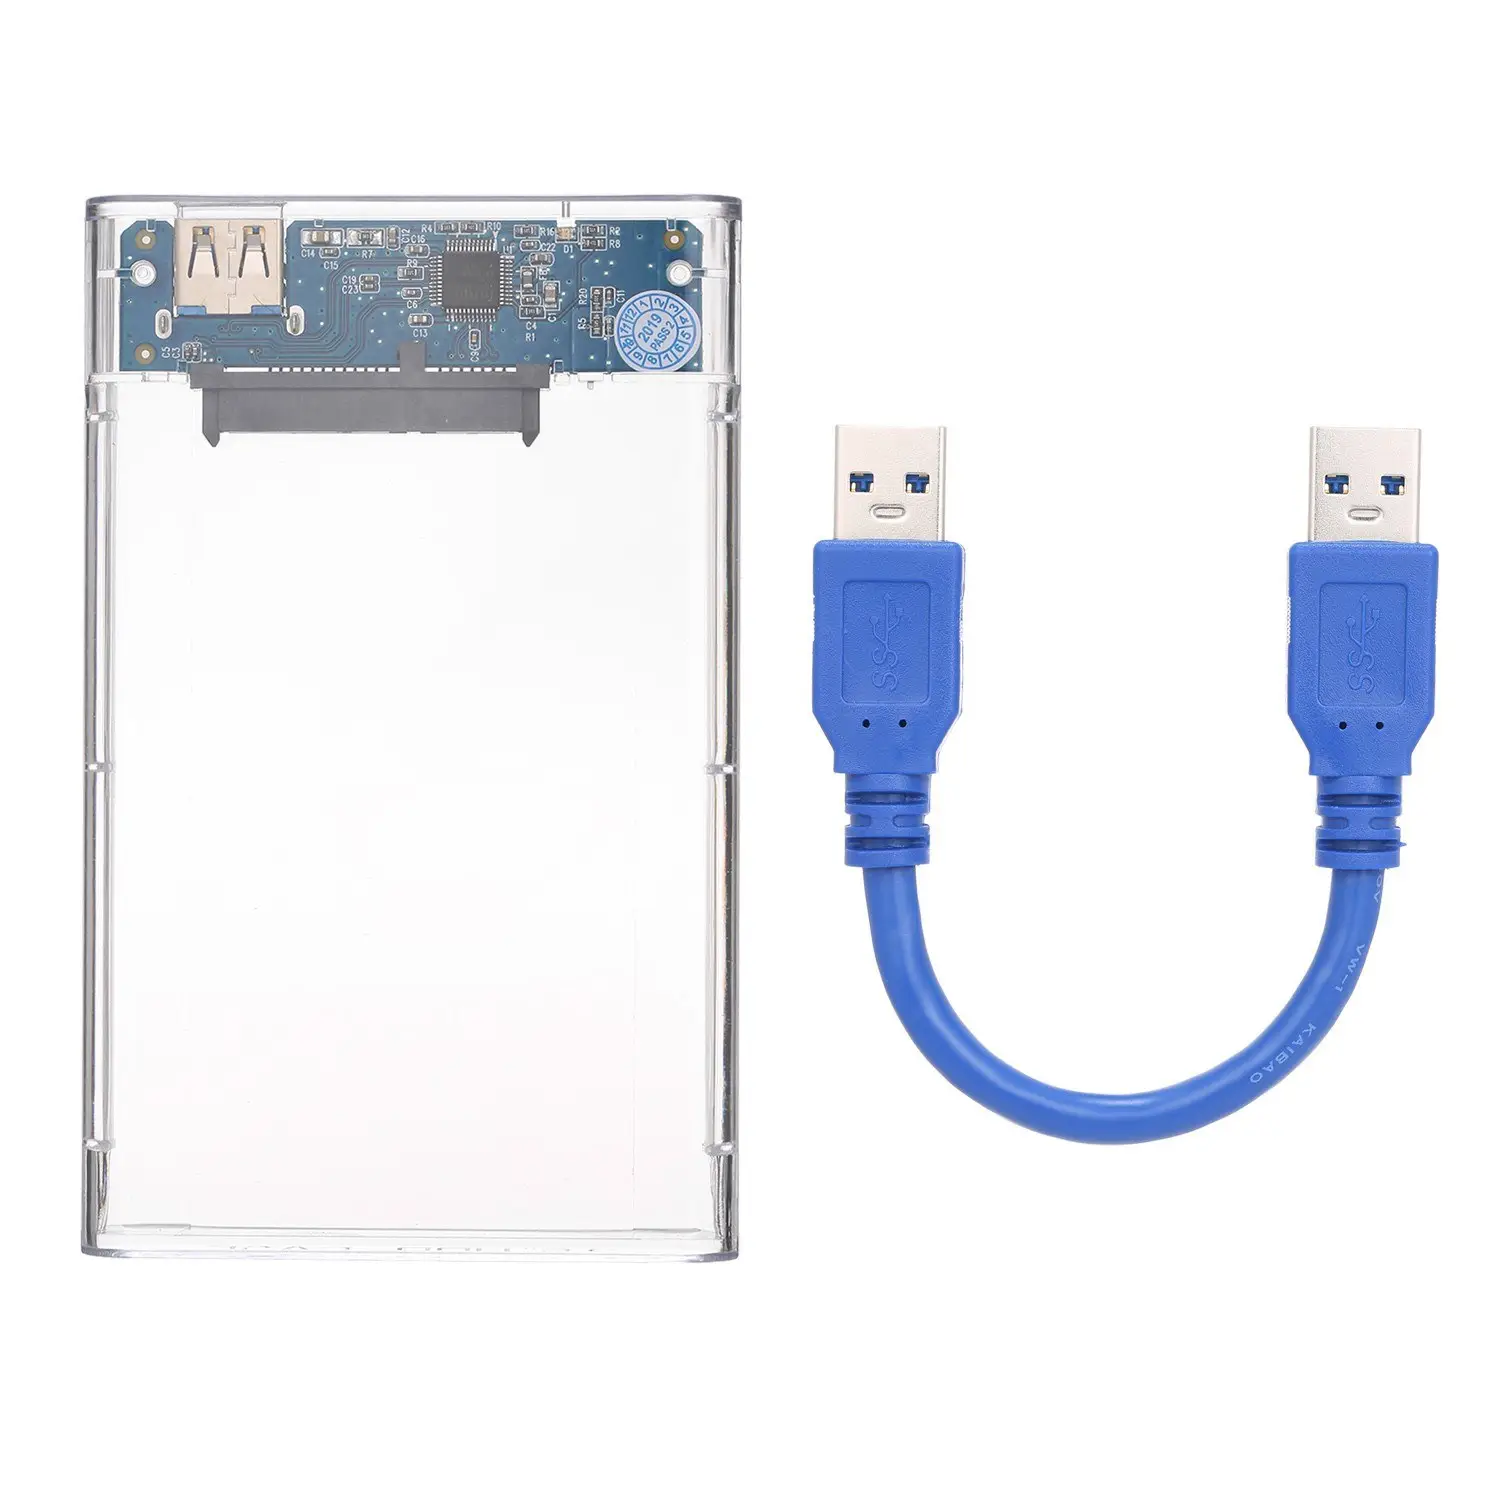 USB 3.0 HDD Case Box Hard Drive Enclosure Compatible with 2.5-inch SATA HDD Enclosure Universal Transparent